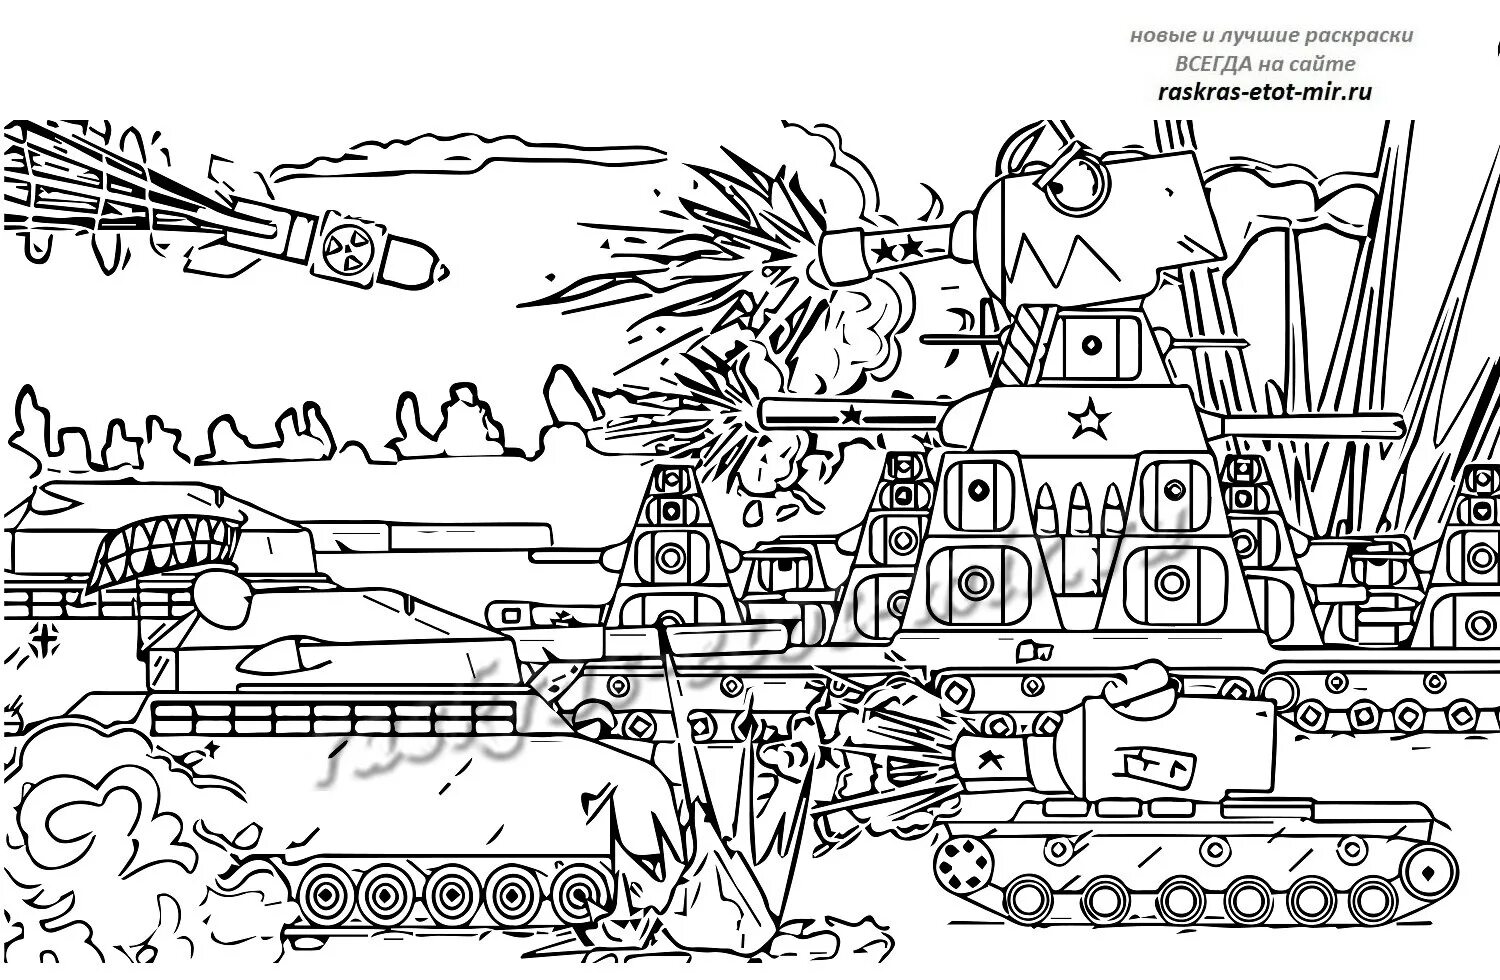 Kv44 tank for kids #5